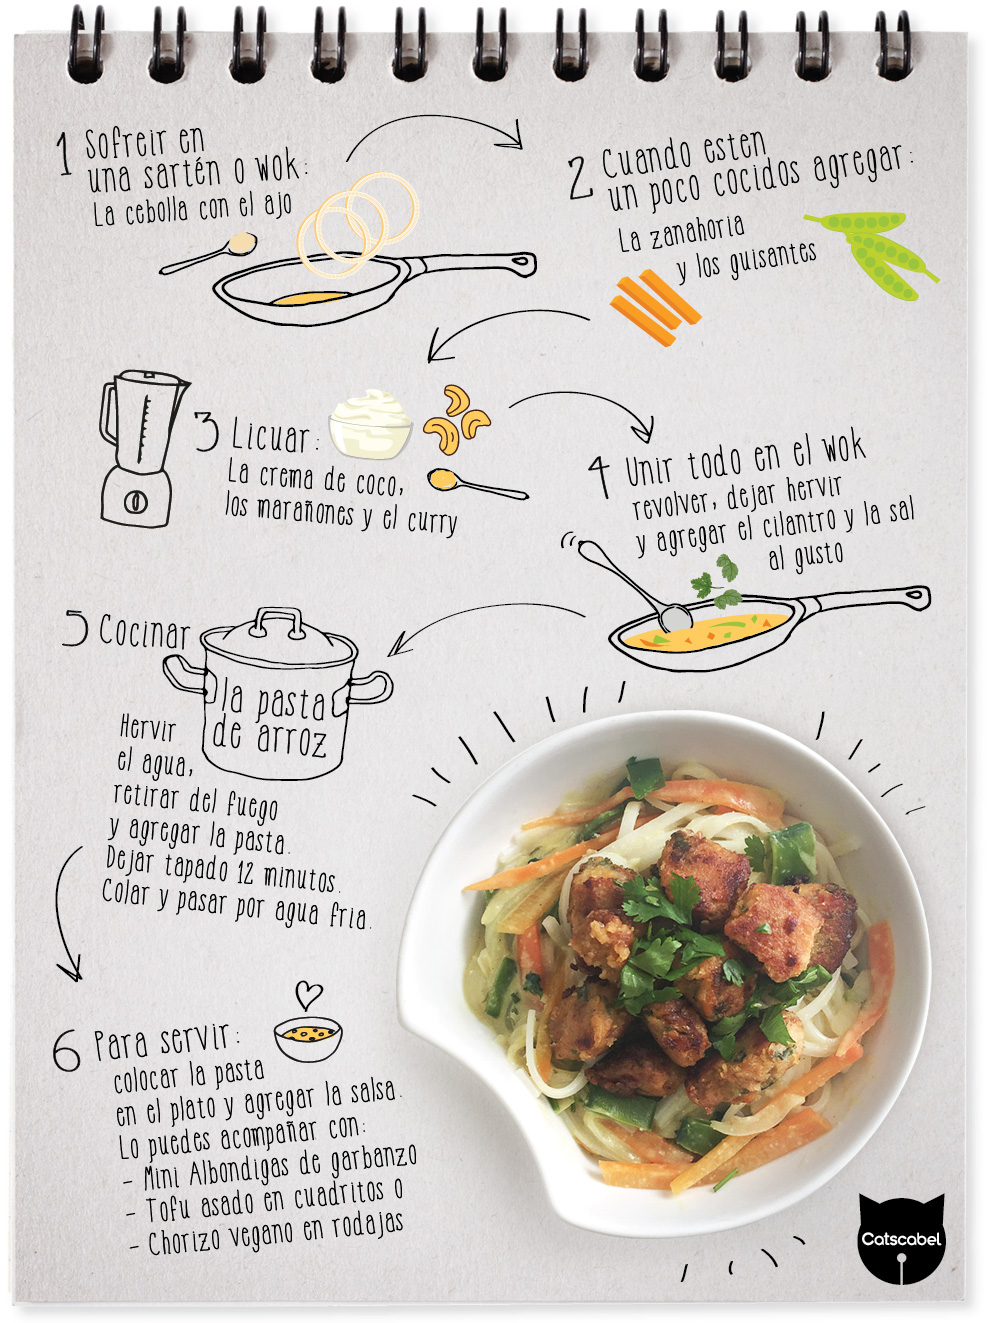 wok thailandes blog receta